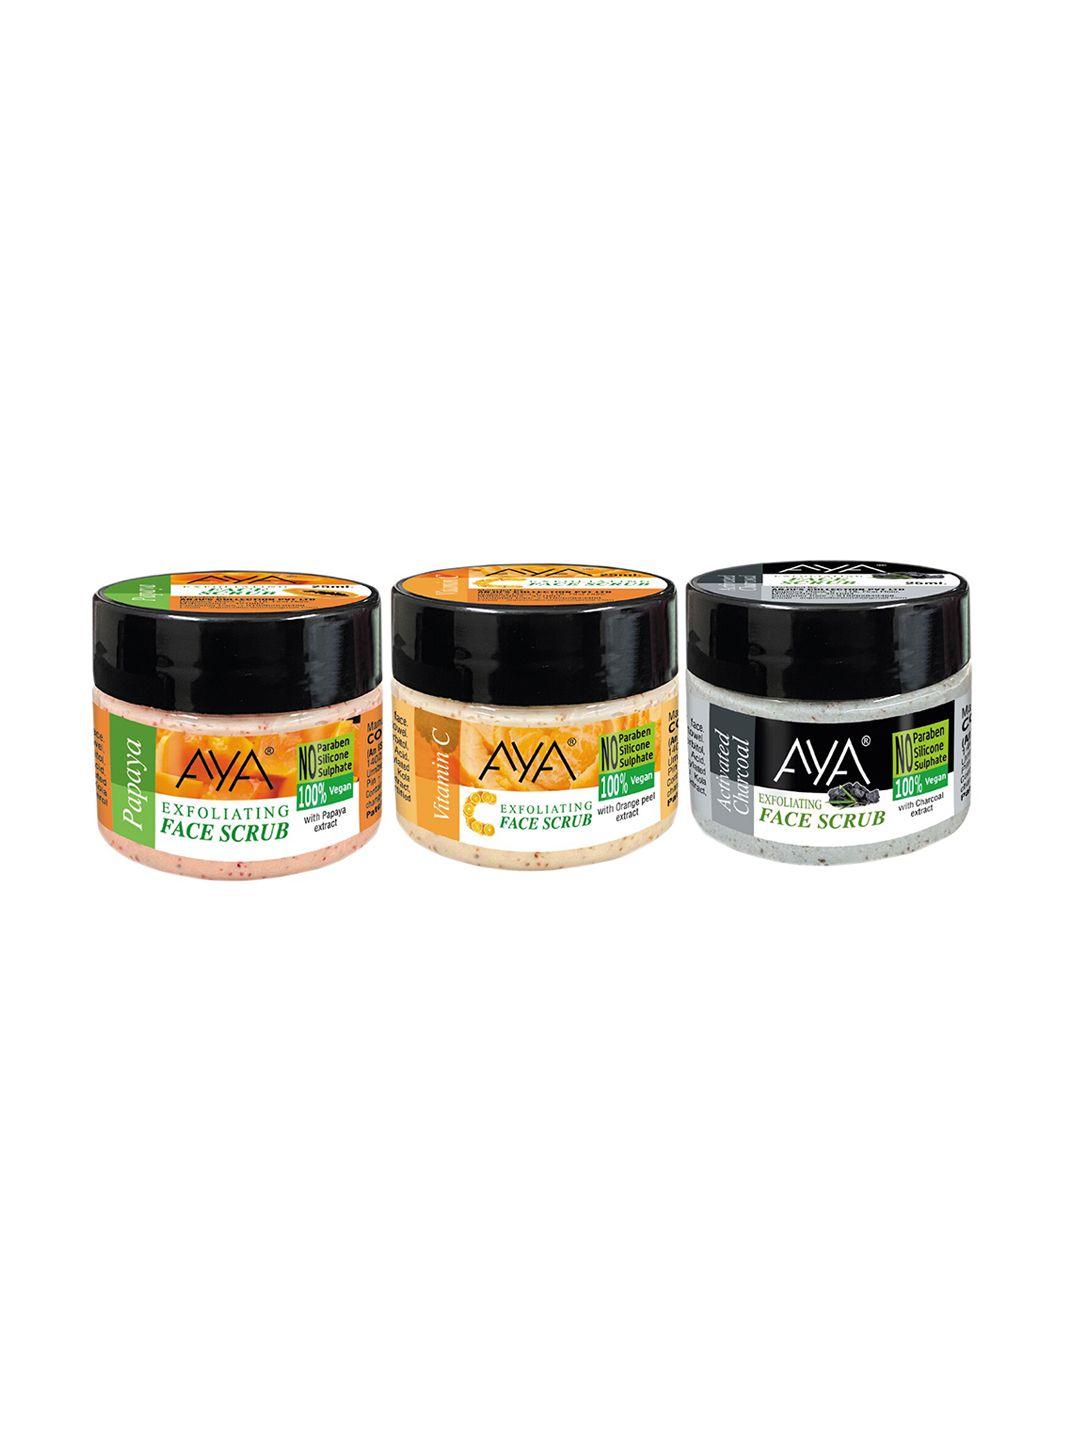 AYA Set of 3 Exfoliating Face Scrub 25 ml each - Activated Charcoal + Papaya + Vitamin C